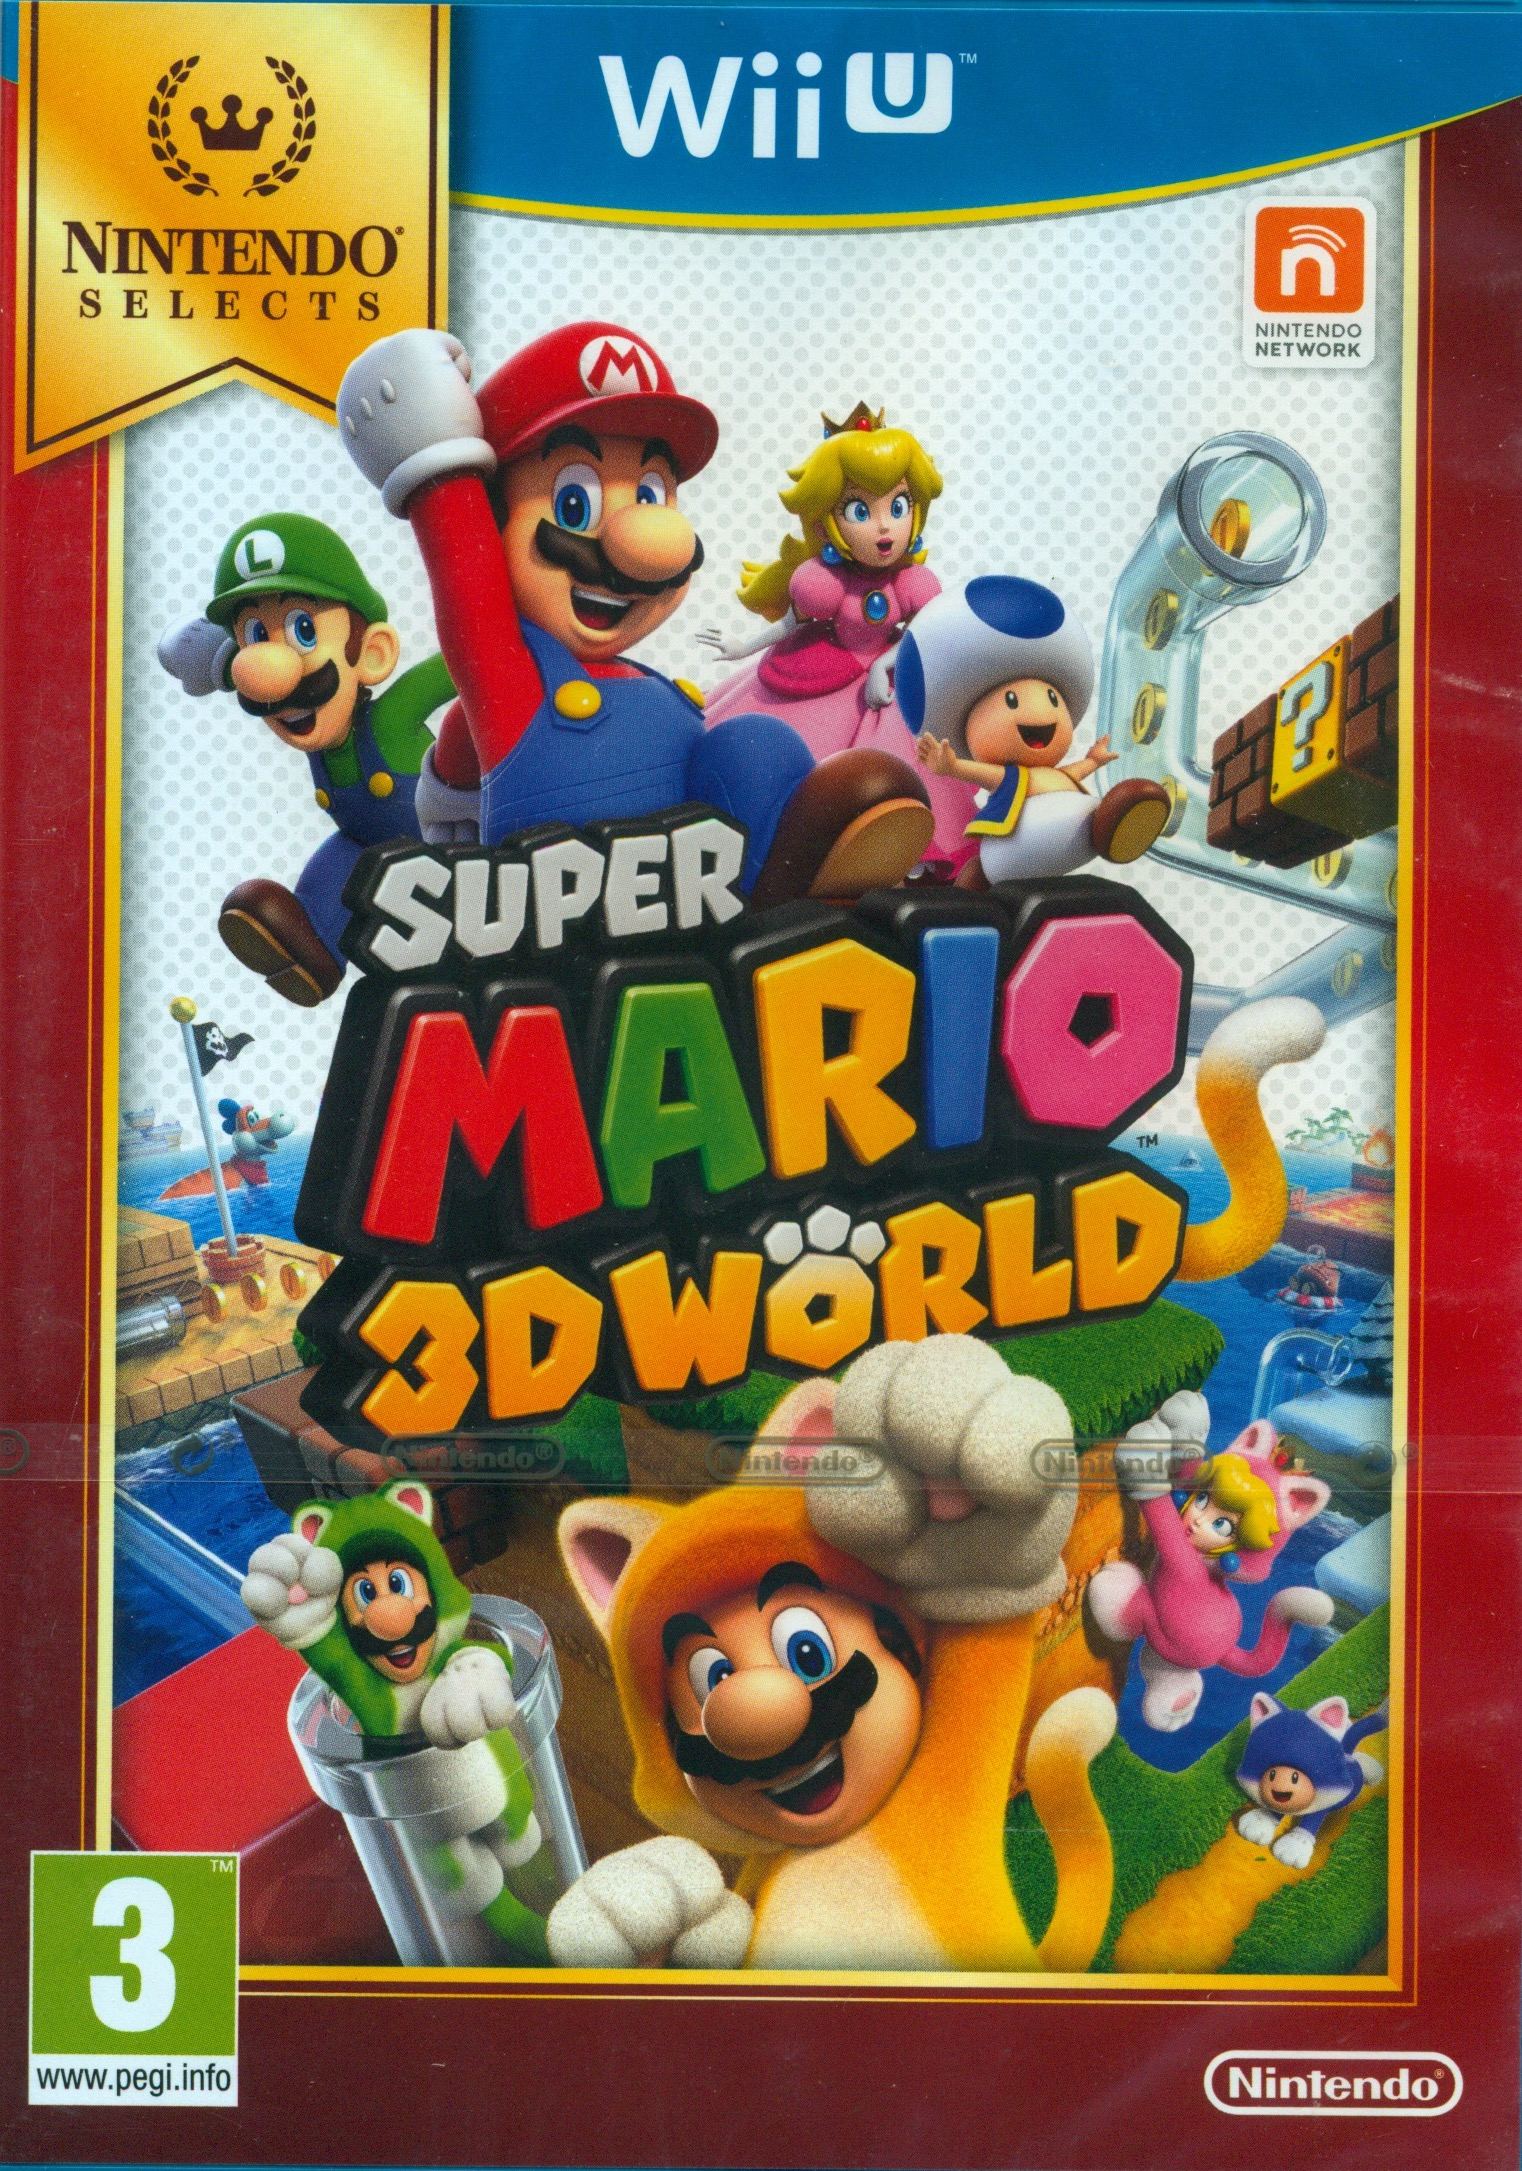 Super Mario 3D World (Wii U)